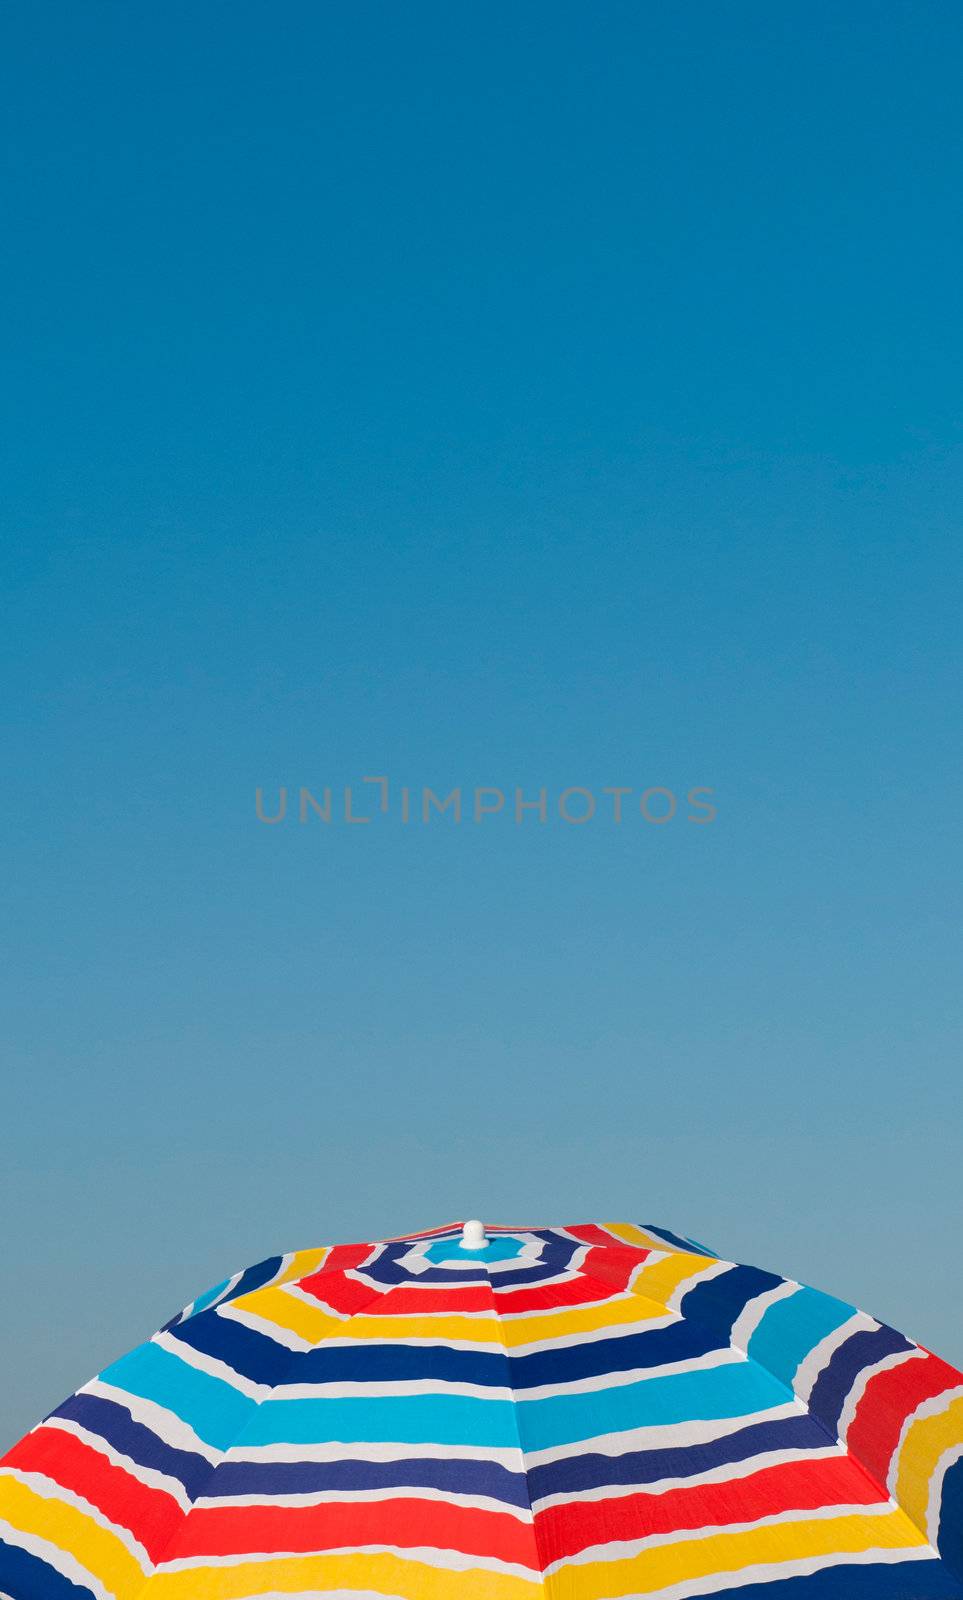 colorful beach umbrella against a blue sky background